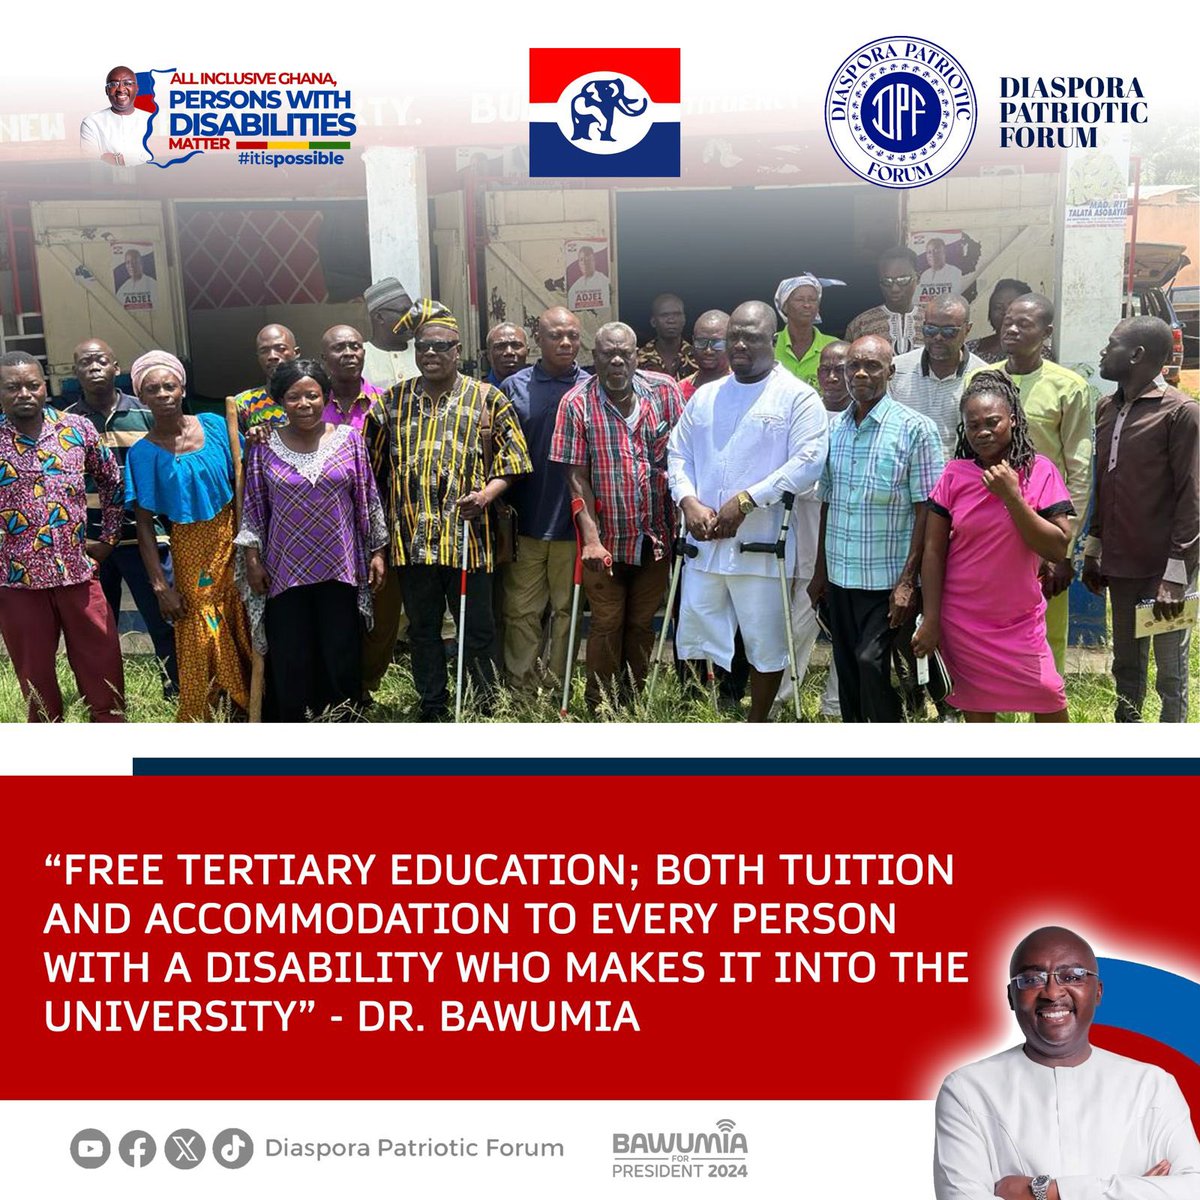 Free tertiary education for all persons living with disability 

~ Dr. Bawumia
#bawumiacares 
#Bawumia2024 
#Boldsolutions
#DiasporaPatrioticForum 
#PWDsMatter